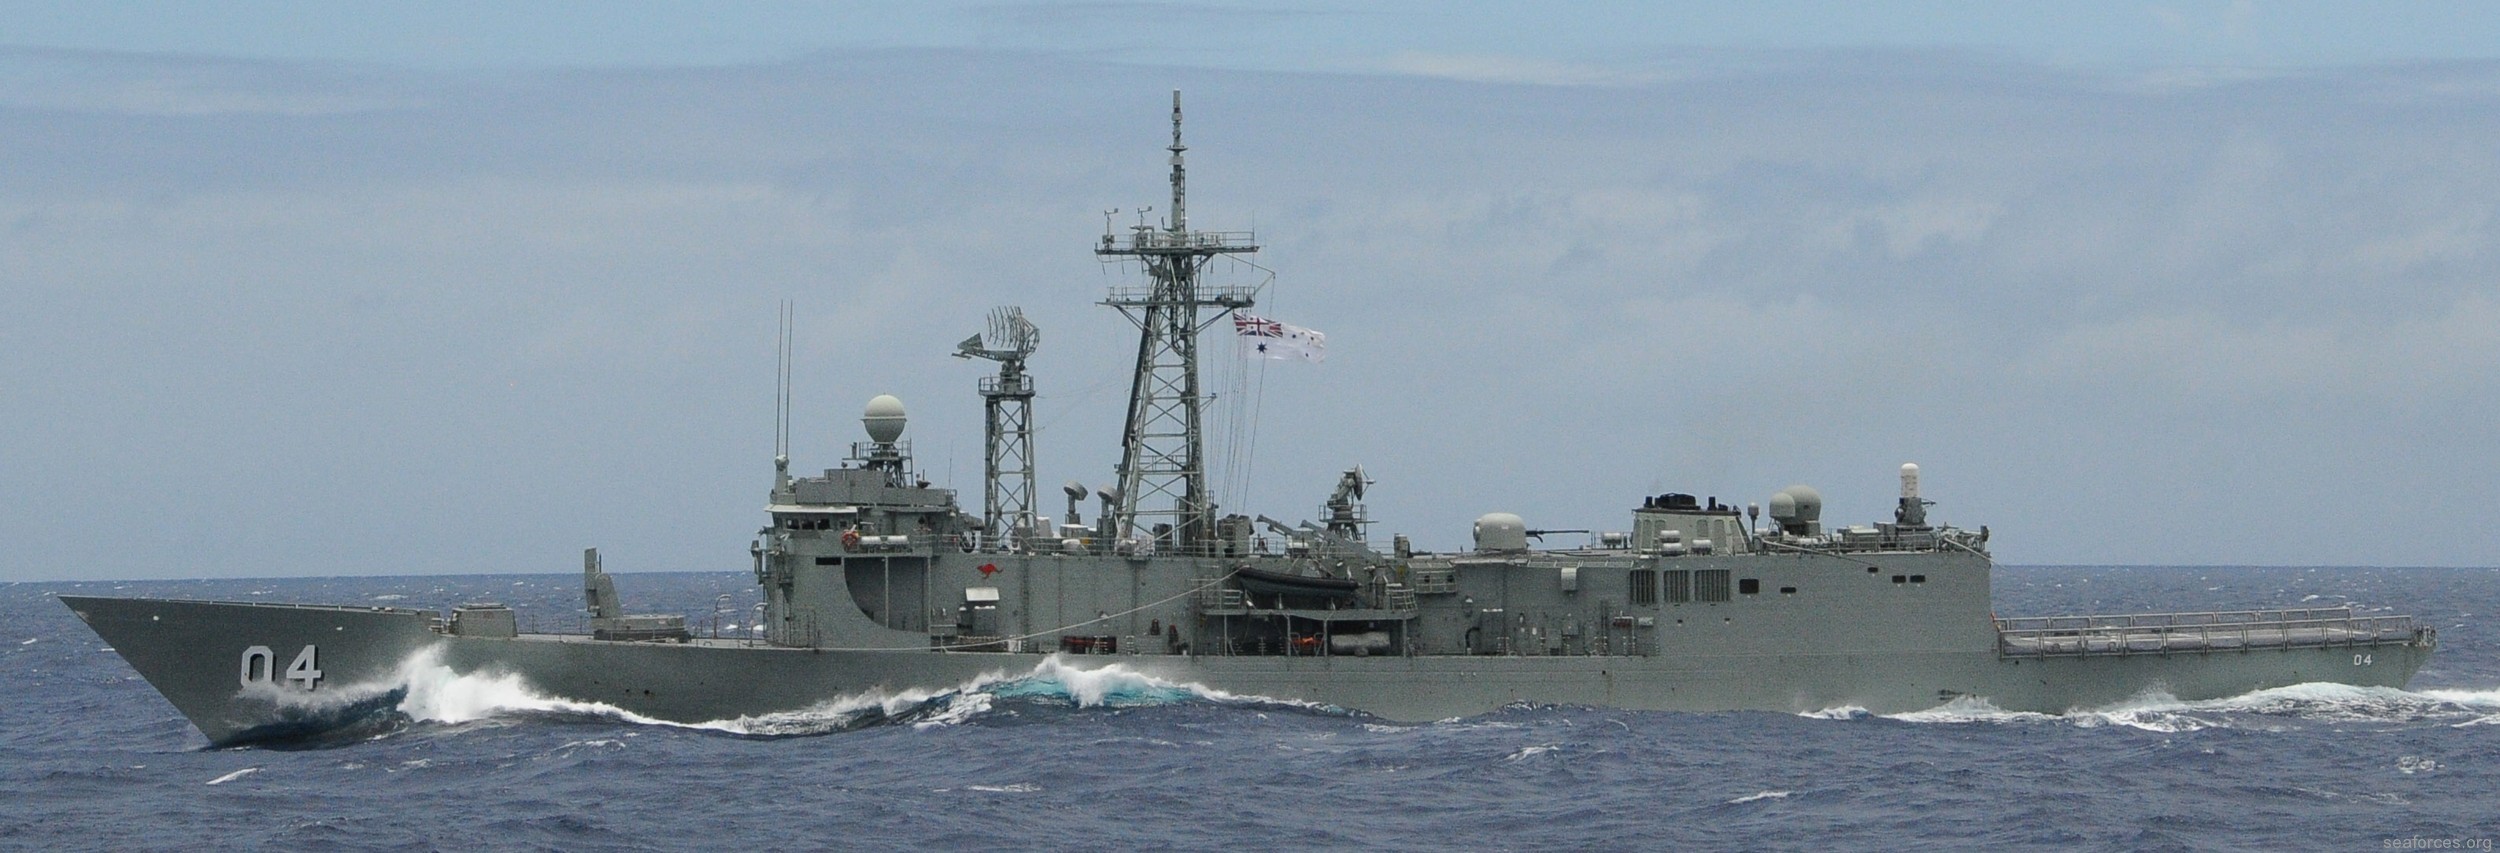 ffg-04 hmas darwin adelaide class frigate royal australian navy 2012 38 exercise rimpac